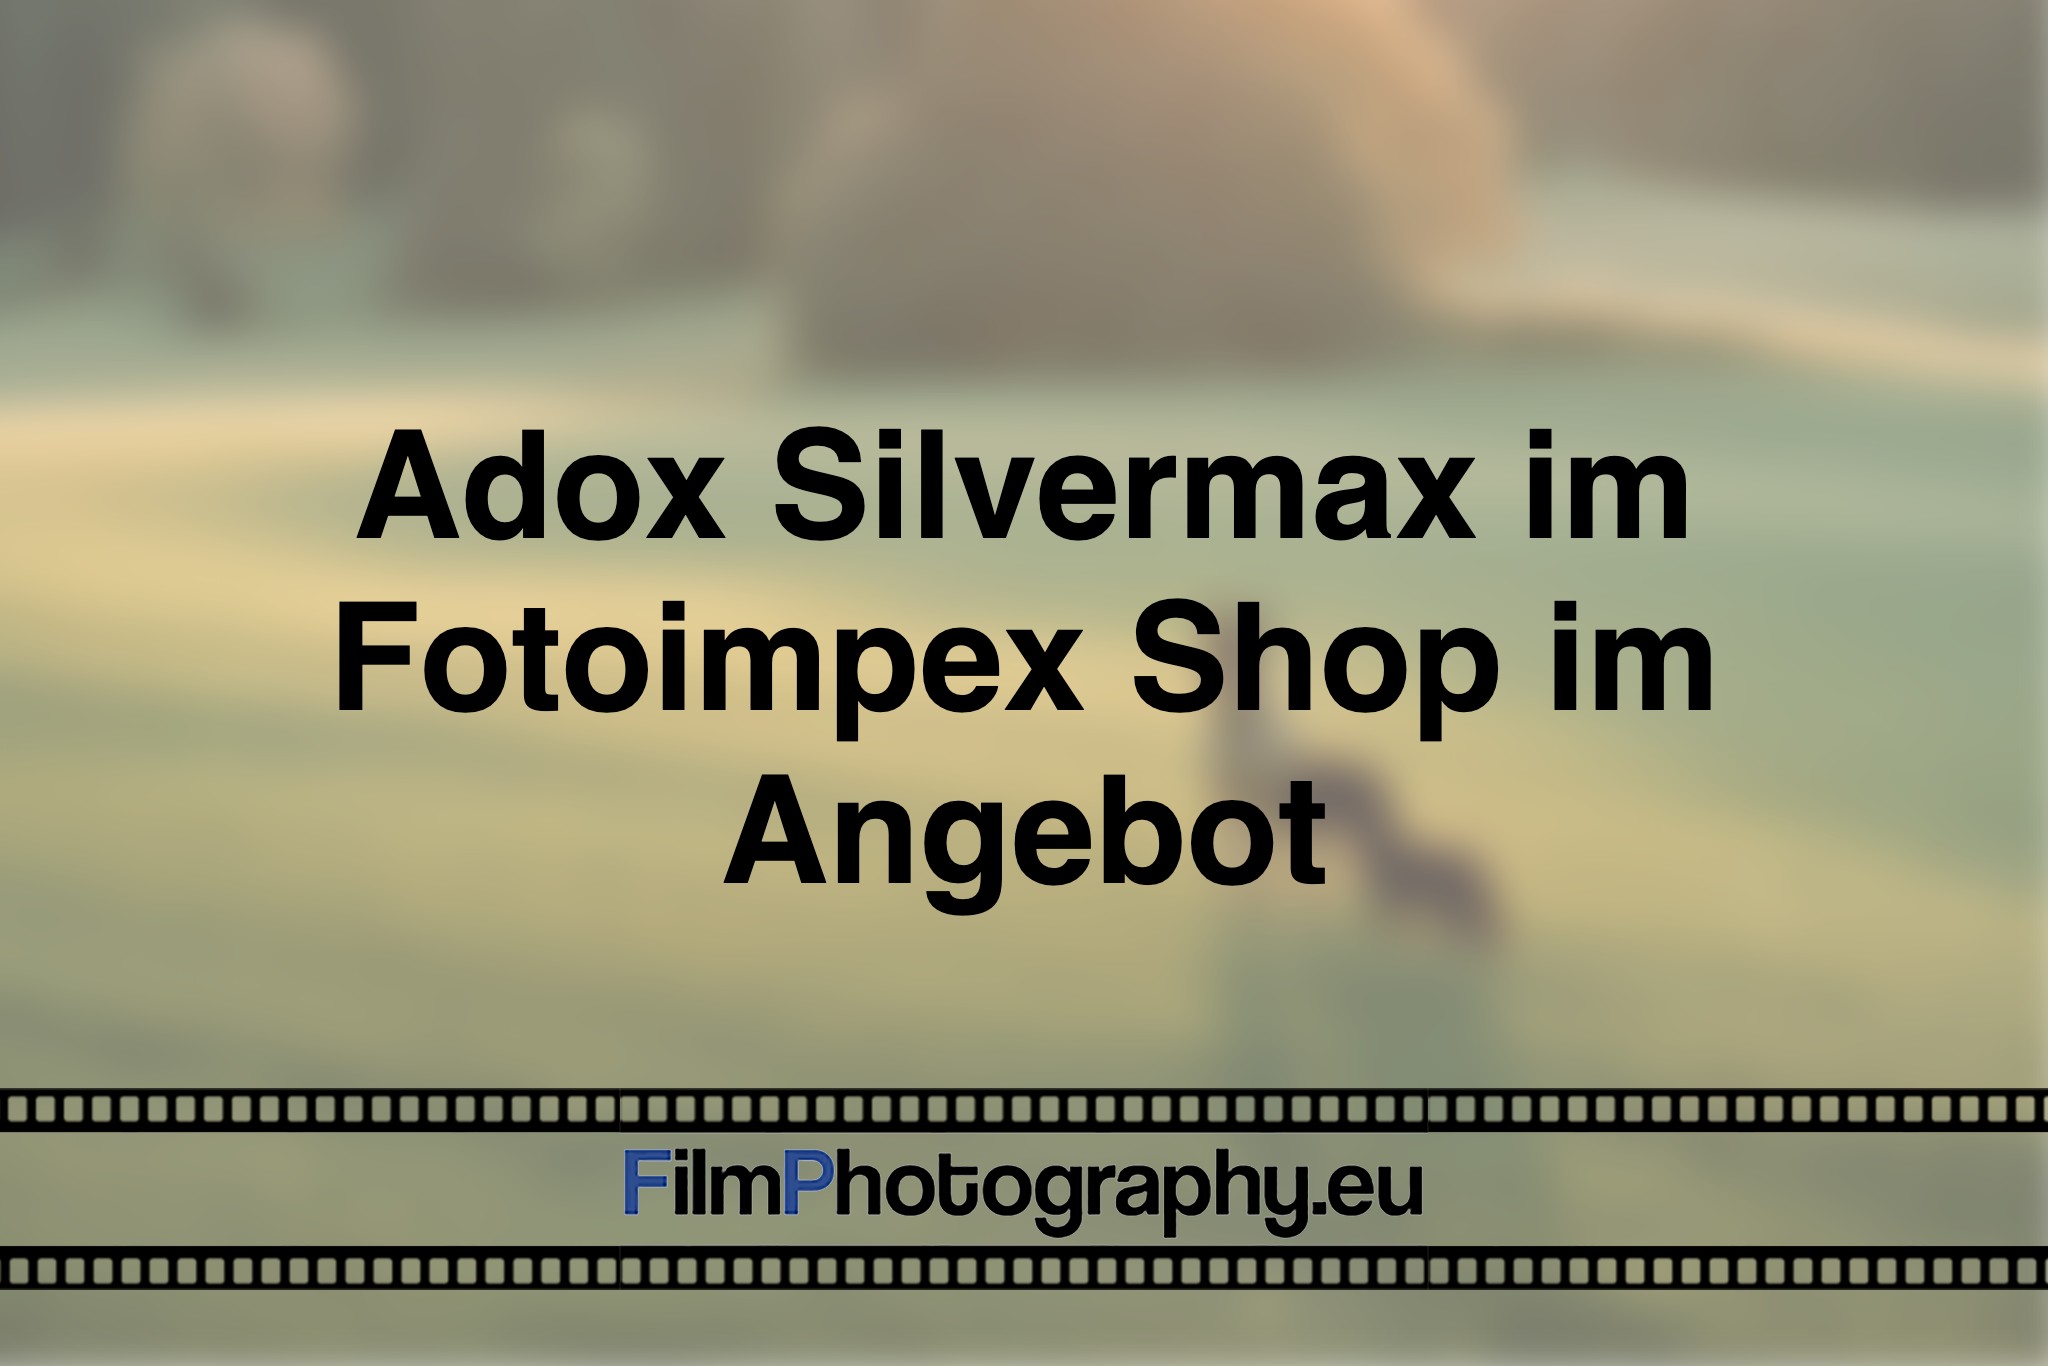 adox-silvermax-im-fotoimpex-shop-im-angebot-photo-bnv